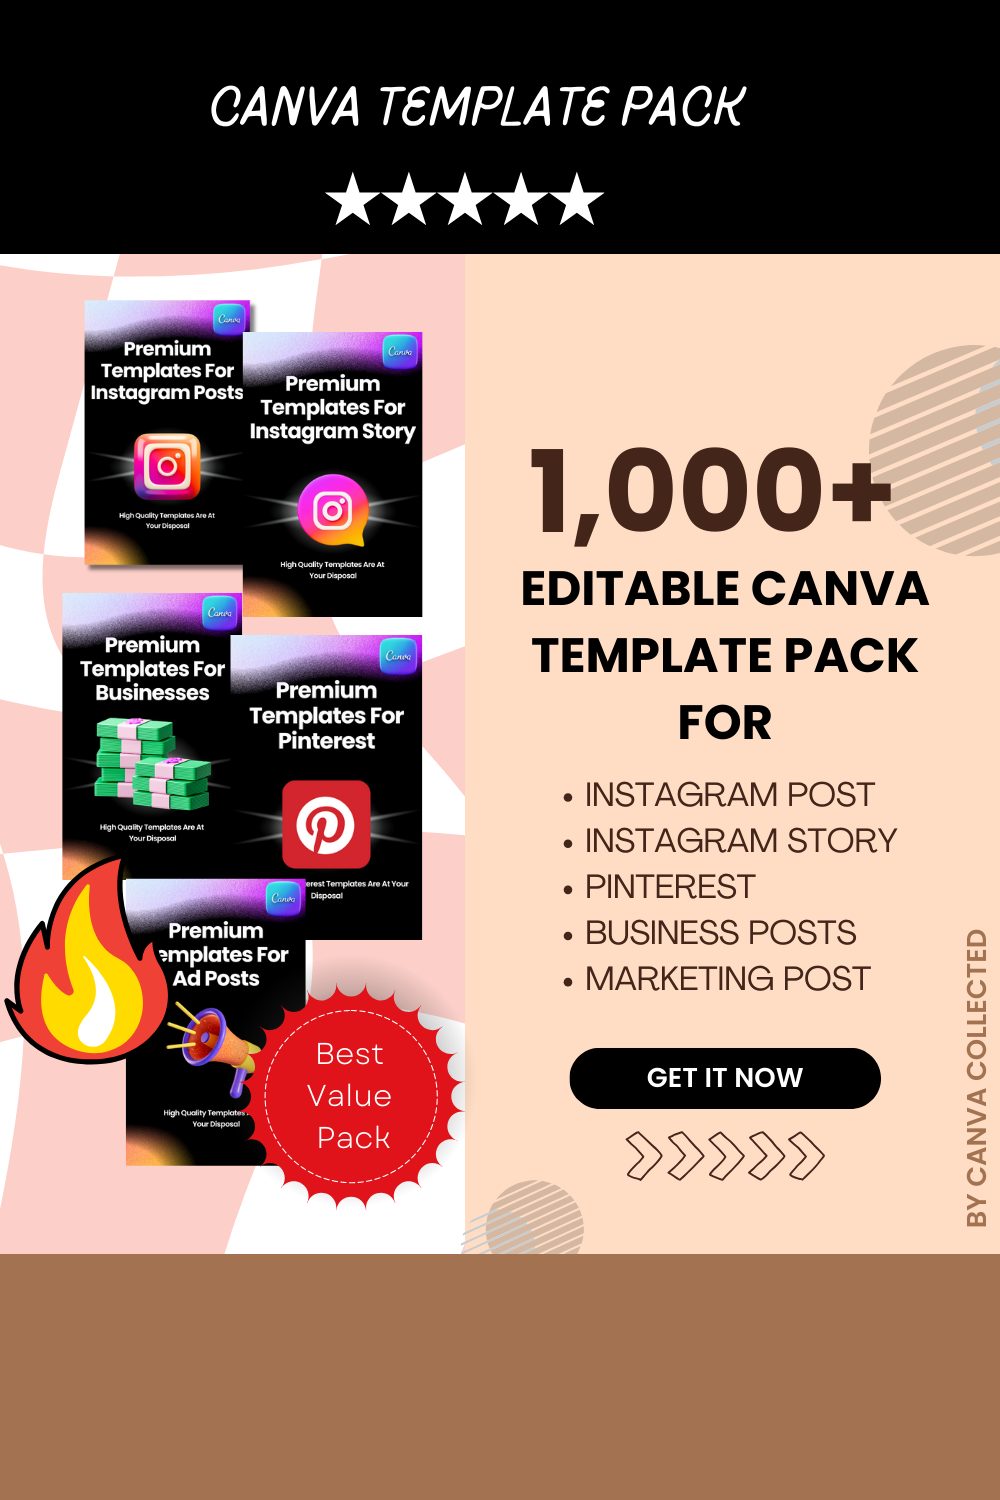 1000+ Canva Template Pack For Instagram Pinterest Business Posts - Social Media Template - Digital Download pinterest preview image.